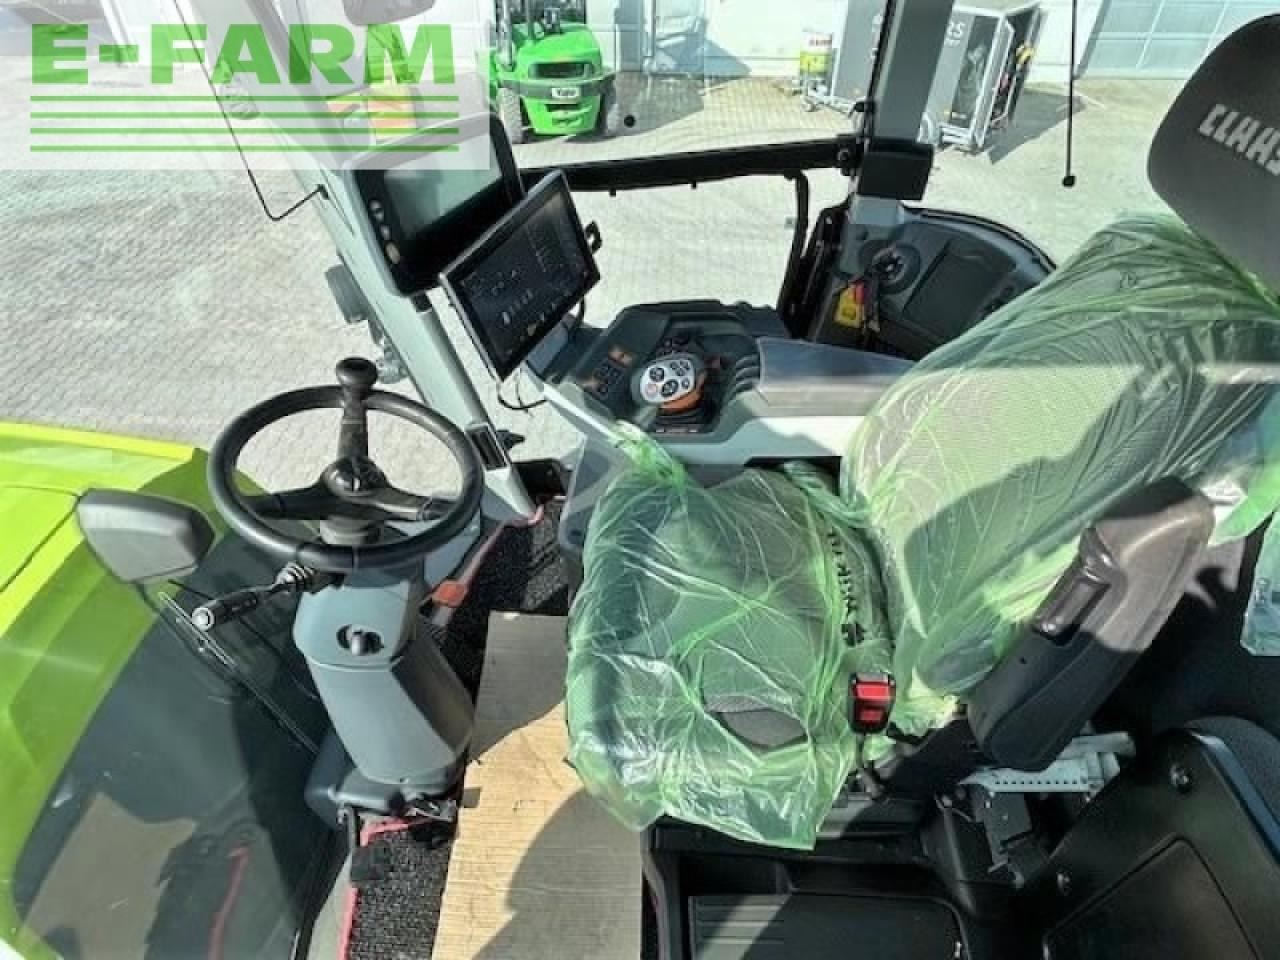 Farm tractor CLAAS xerion 5000 trac ts